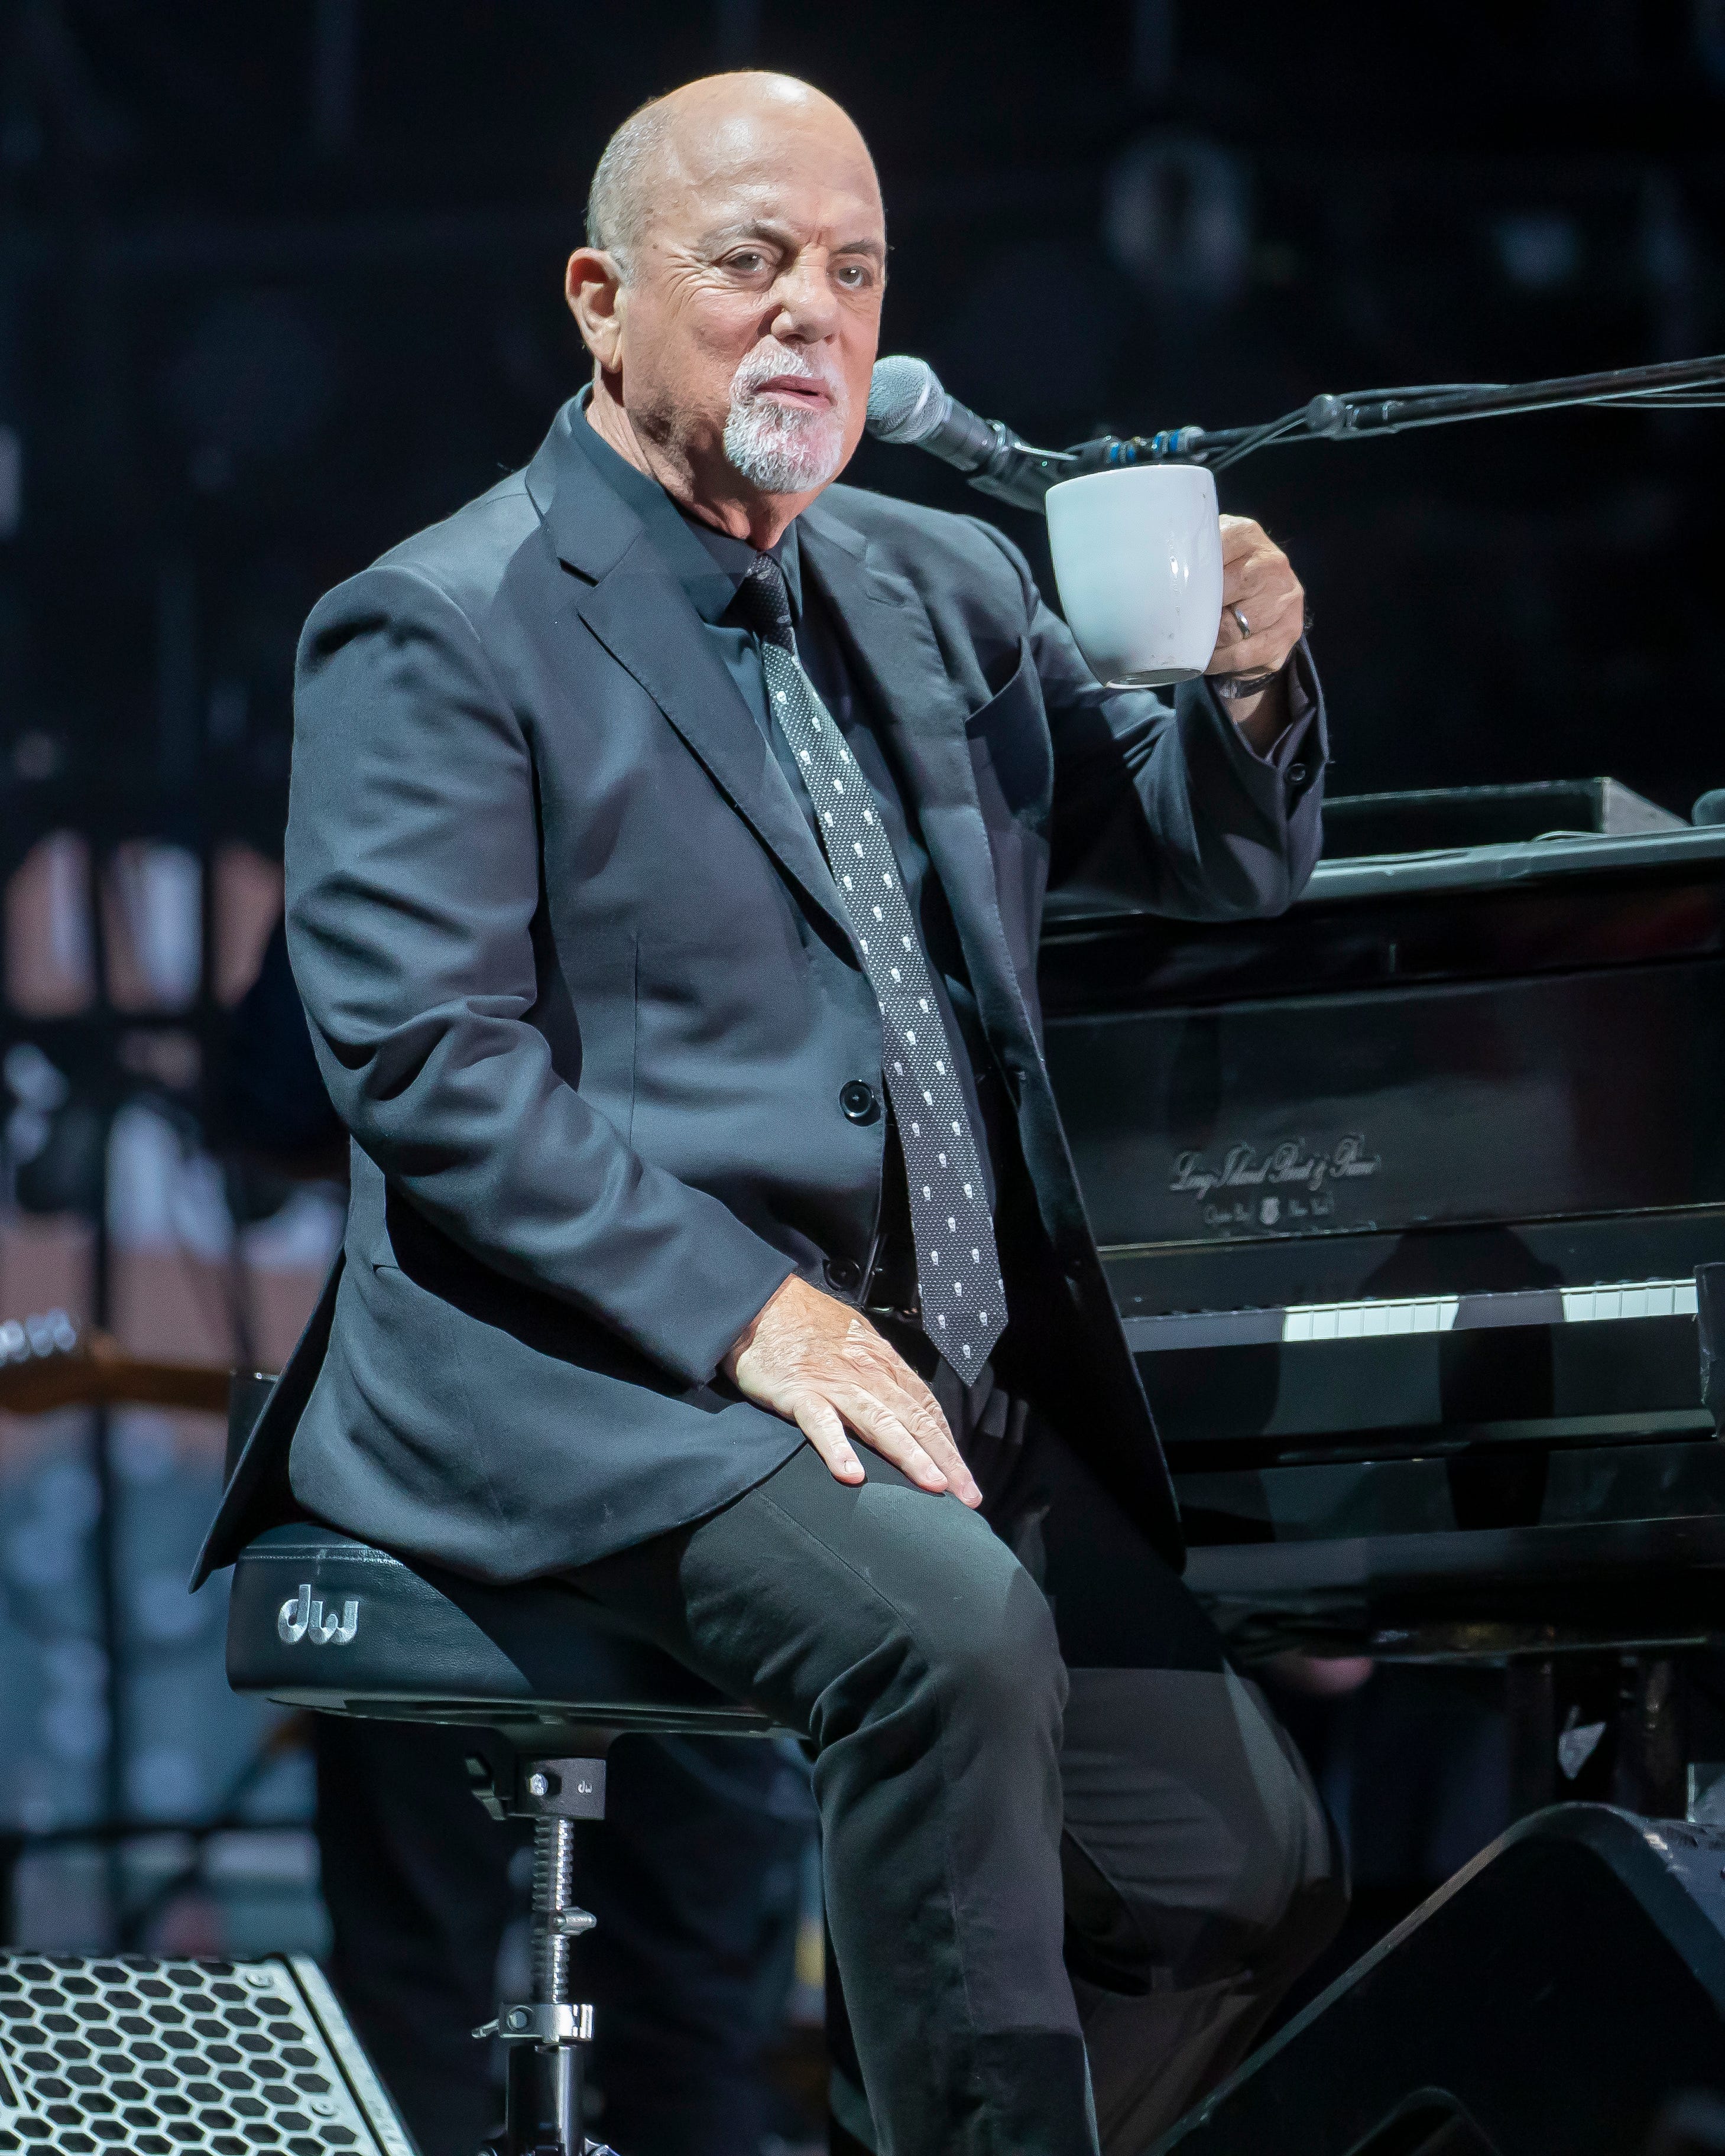 Billy Joel raises his coffee mug while performing in Detroit.